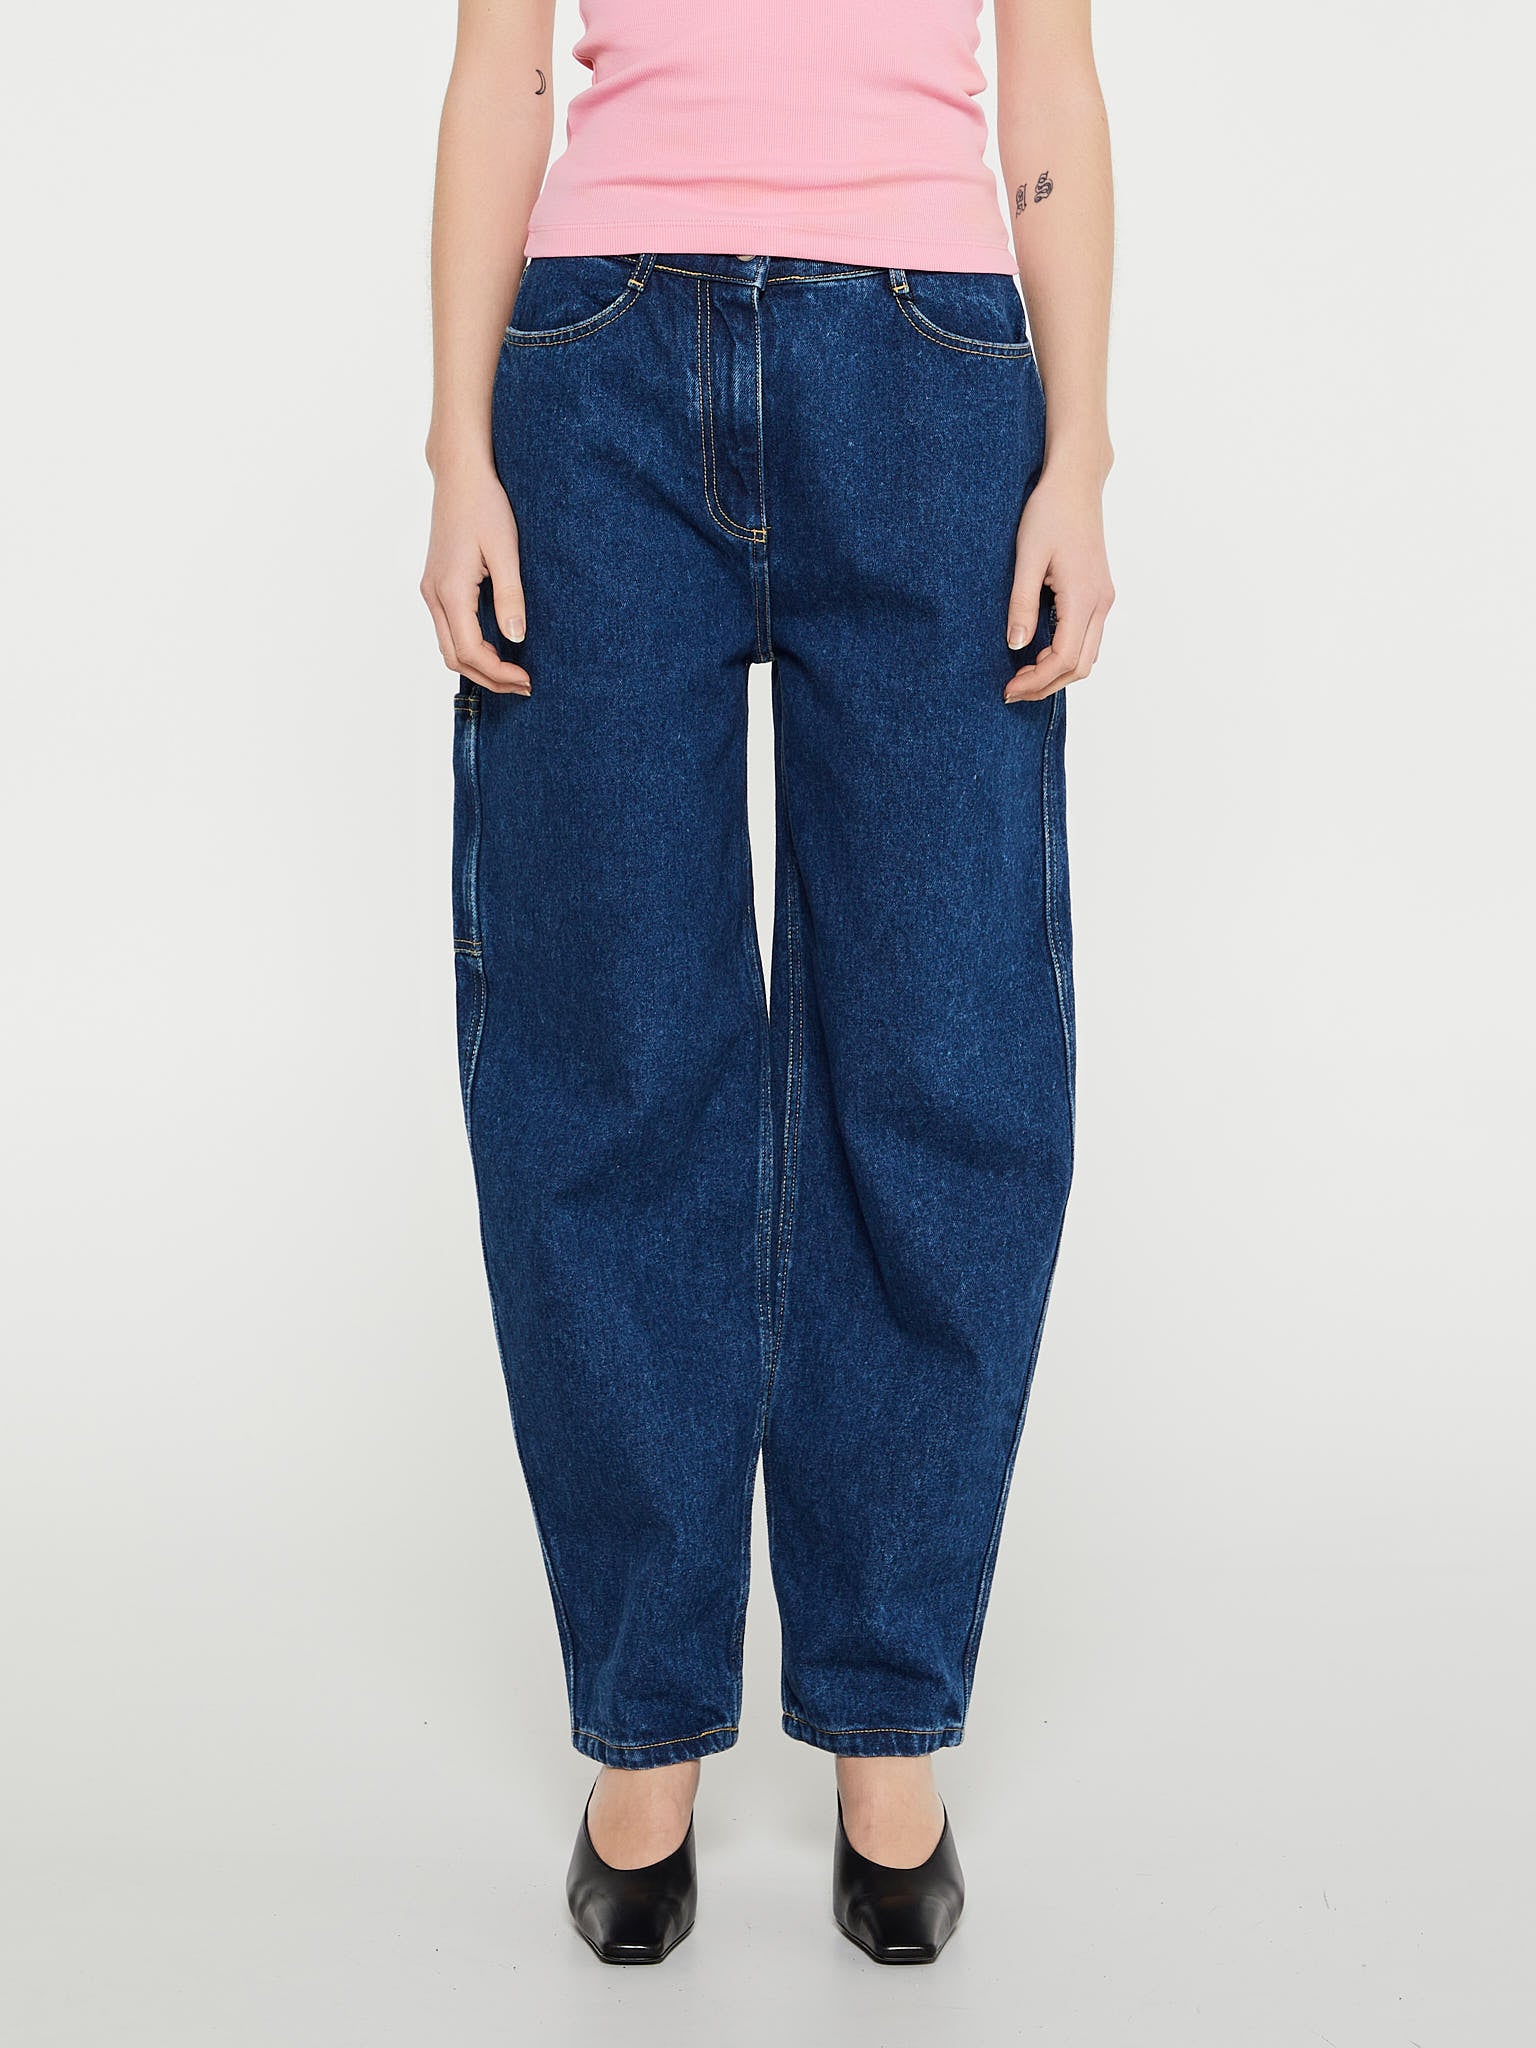 Saks Potts - Helle Jeans in Indigo Blue